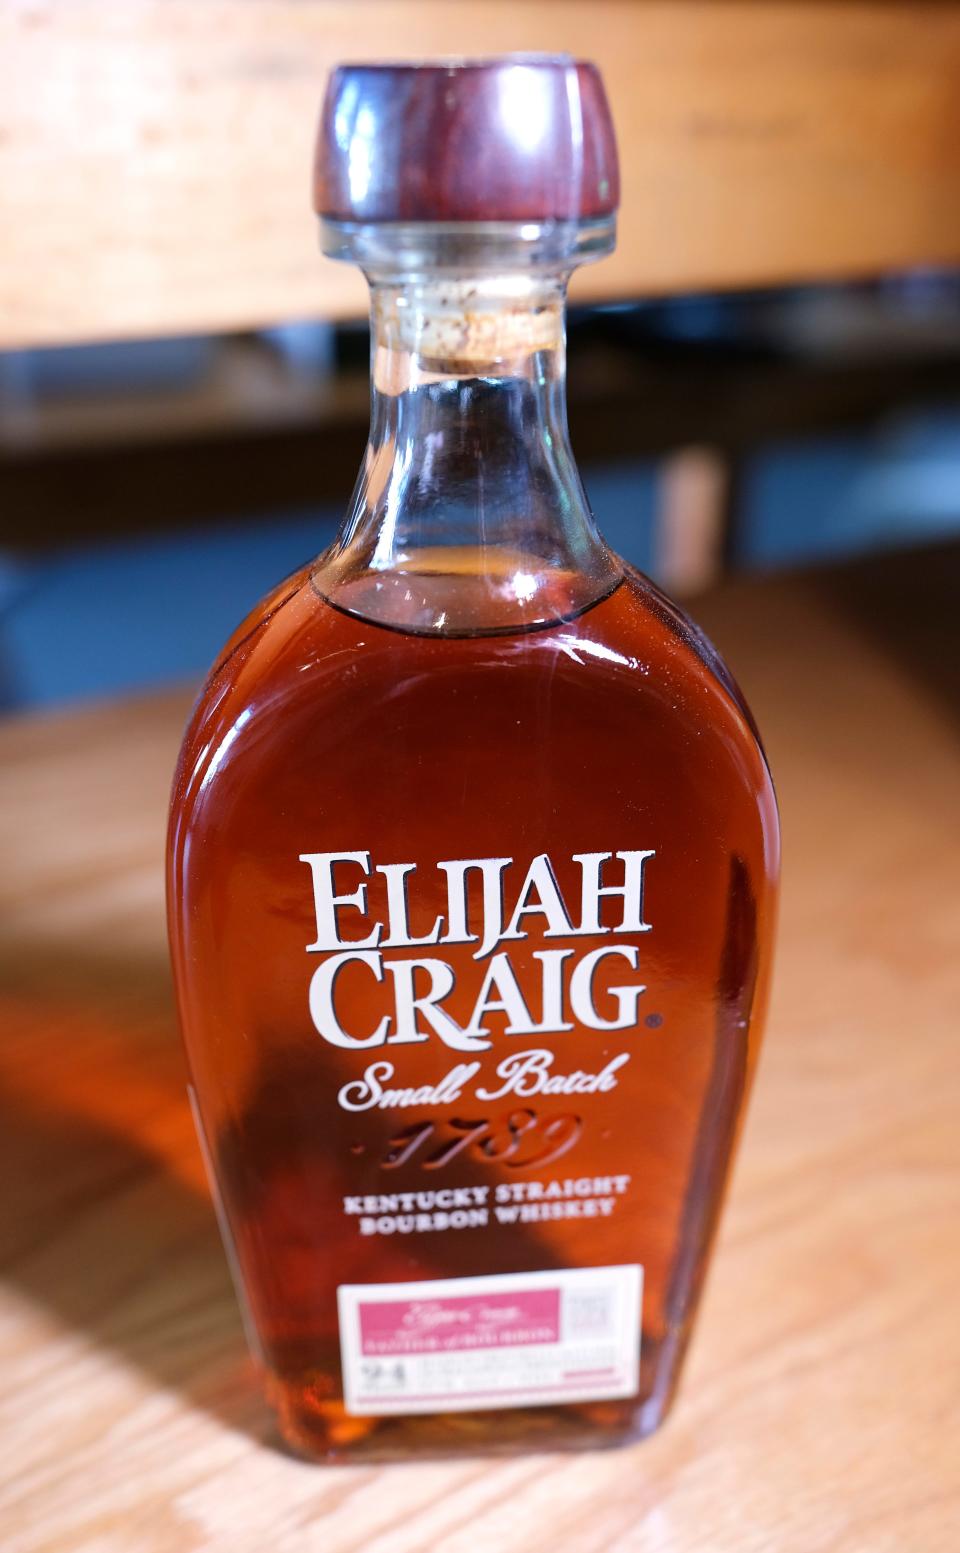 A good bottle of Elijah Craig: Kentucky Straight Bourbon Whiskey. Gift Guide items from Barkeep Supply, Thursday, December 9, 2021. 